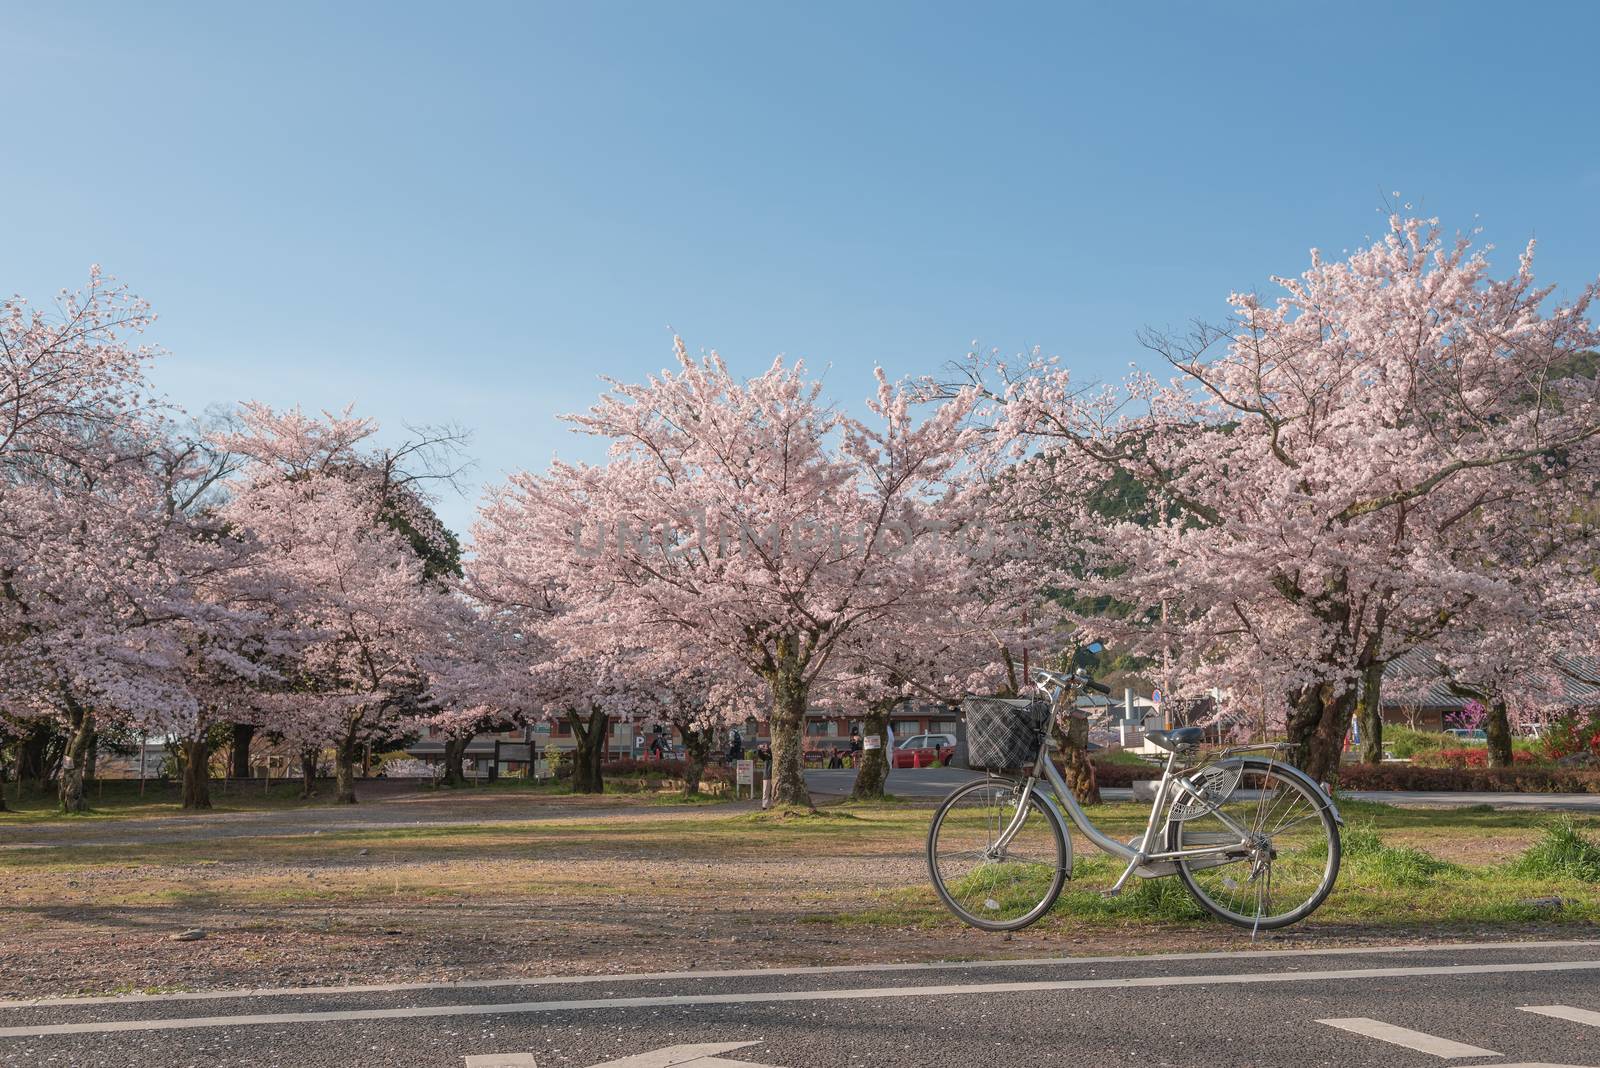 Japanese spring scenic with cherry blossom, Arashiyama, Kyoto, Japan